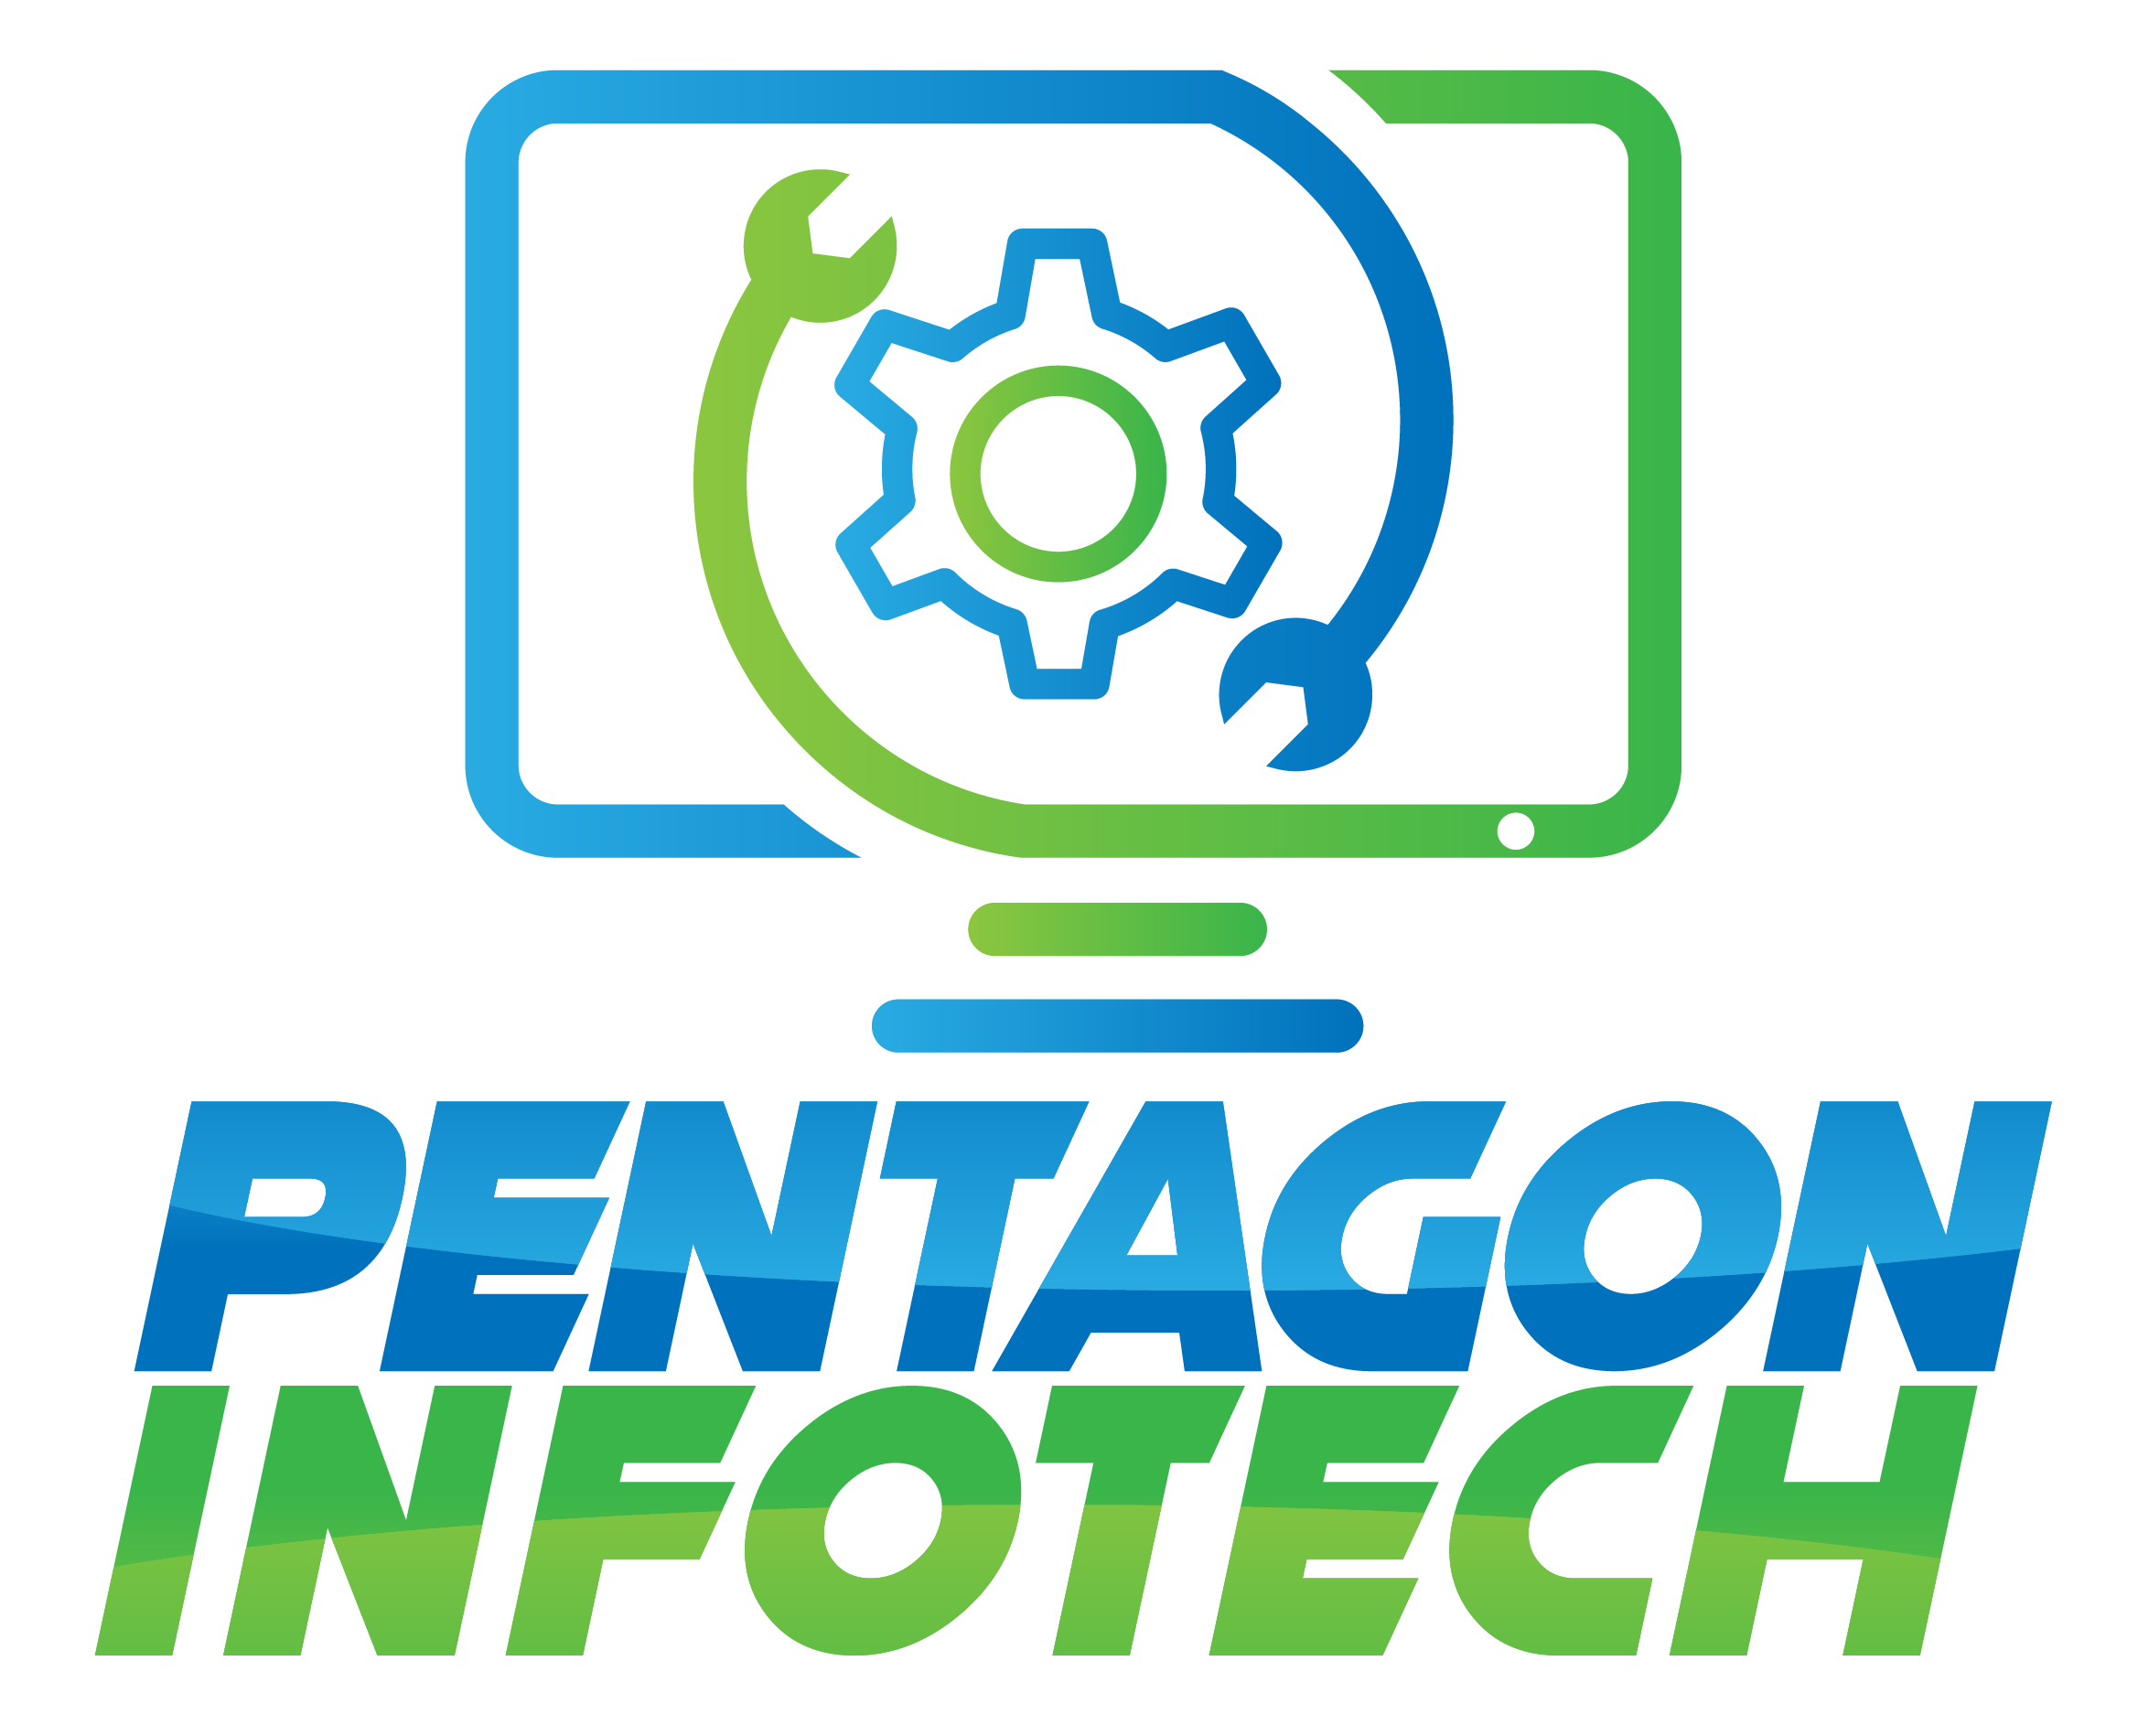 cropped-Pentagon-Infotech-01.png